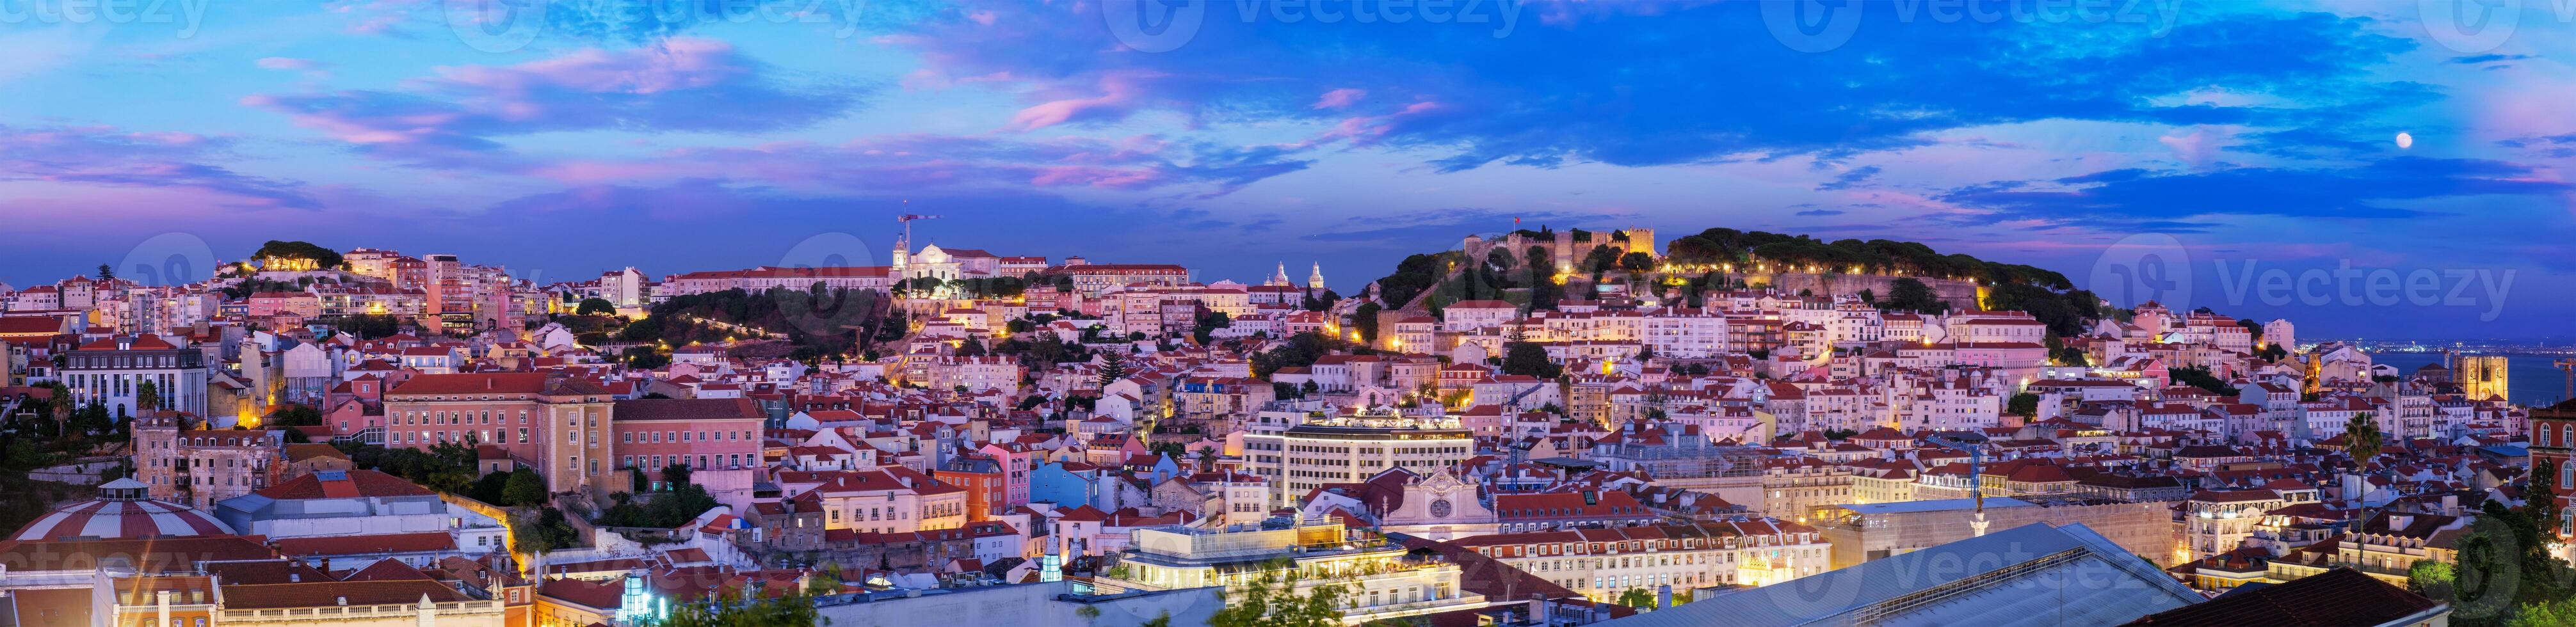 panorama di Lisbona a partire dal miradouro de sao pedro de alcantara punto di vista. Lisbona, Portogallo foto